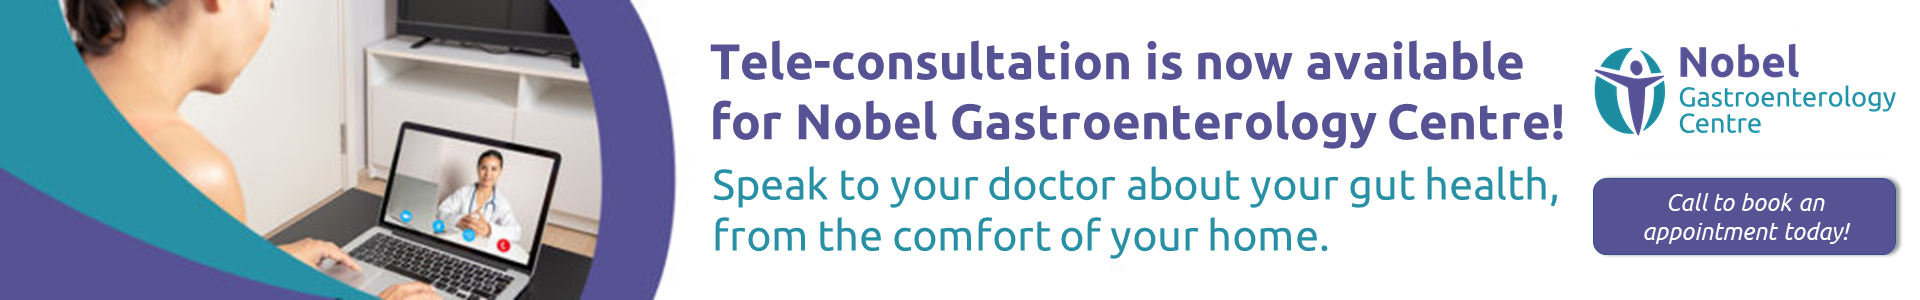 nobel-gastroenterology-tele-consultation